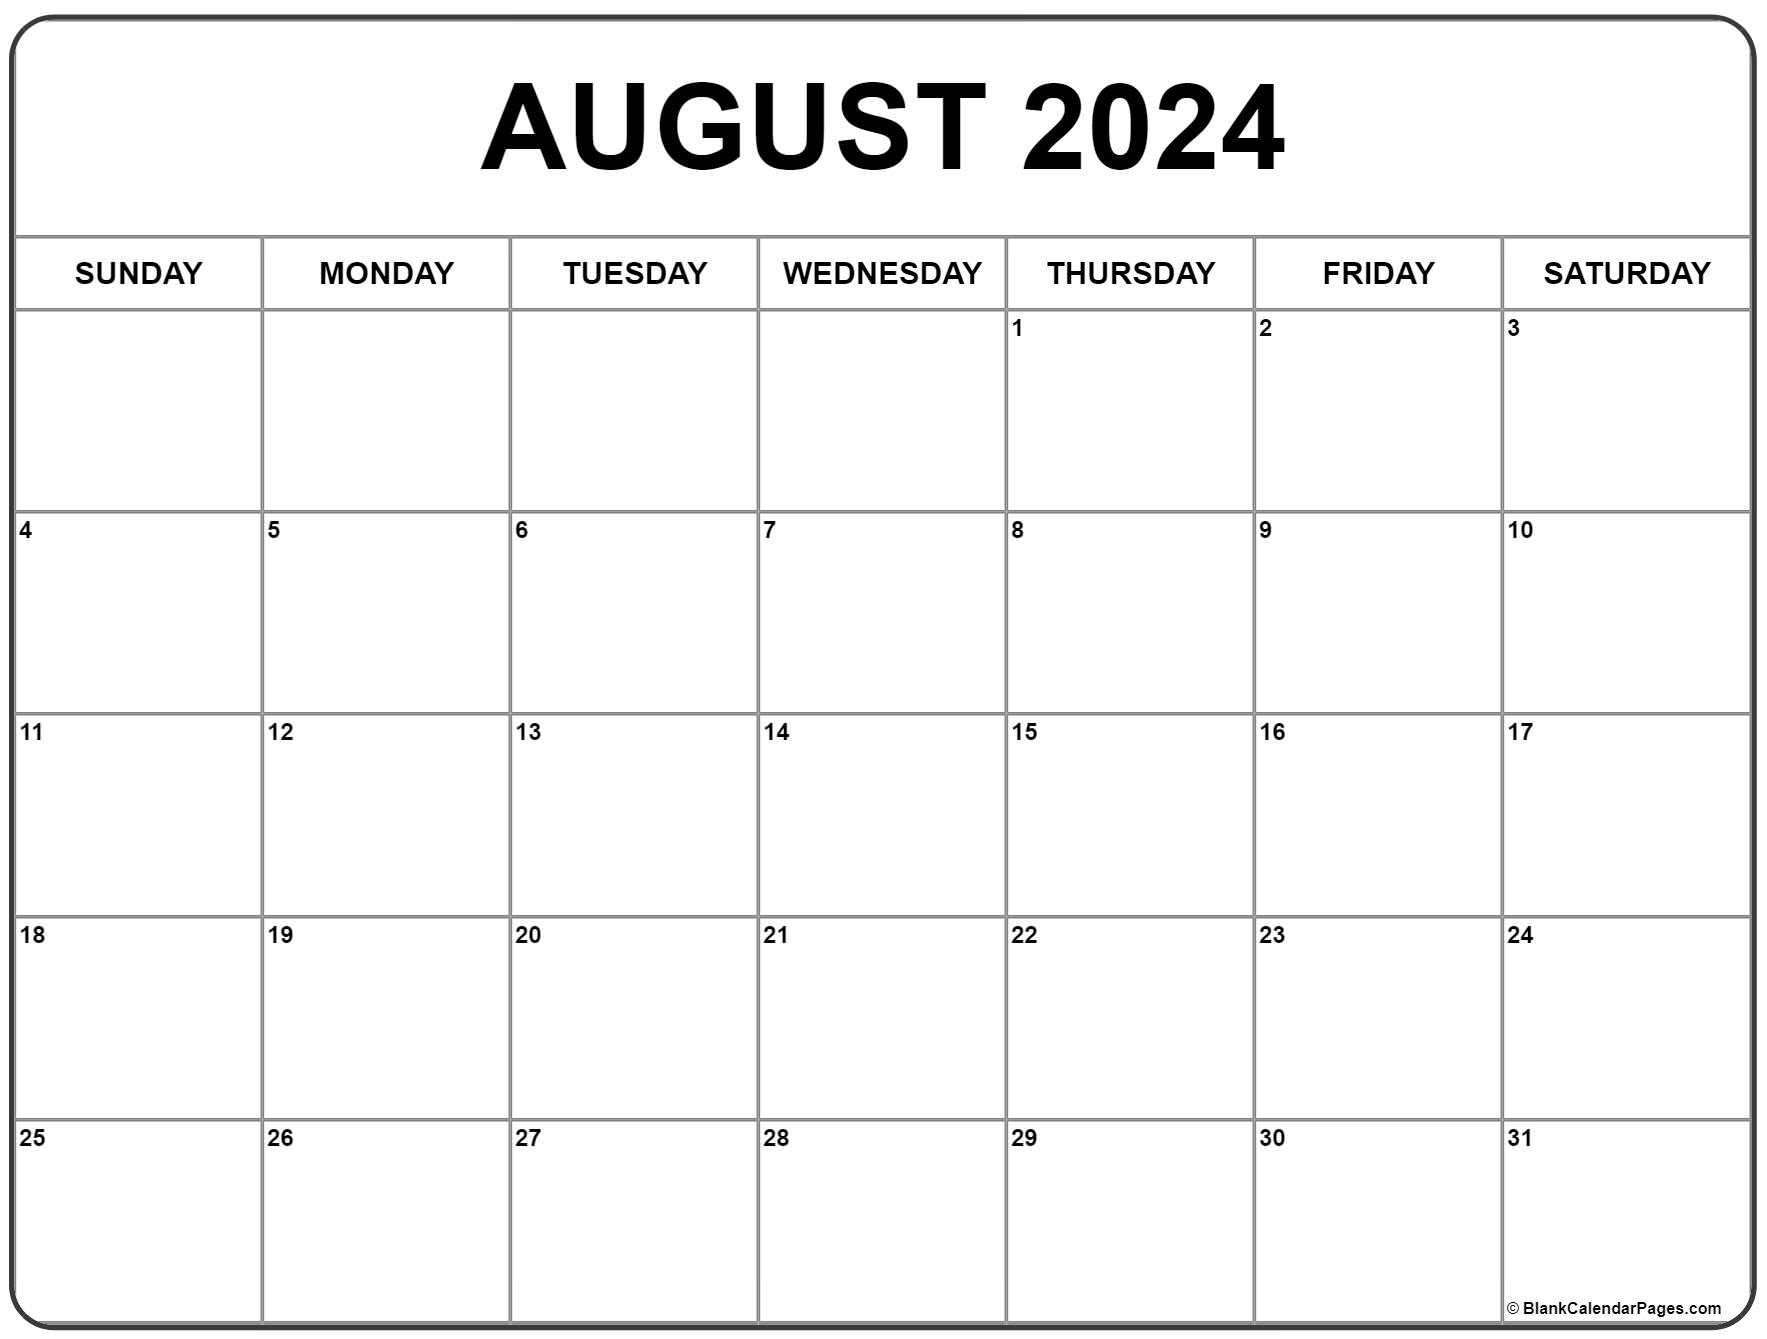 August 2024 Calendar | Free Printable Calendar for Aug 2024 Calendar Printable